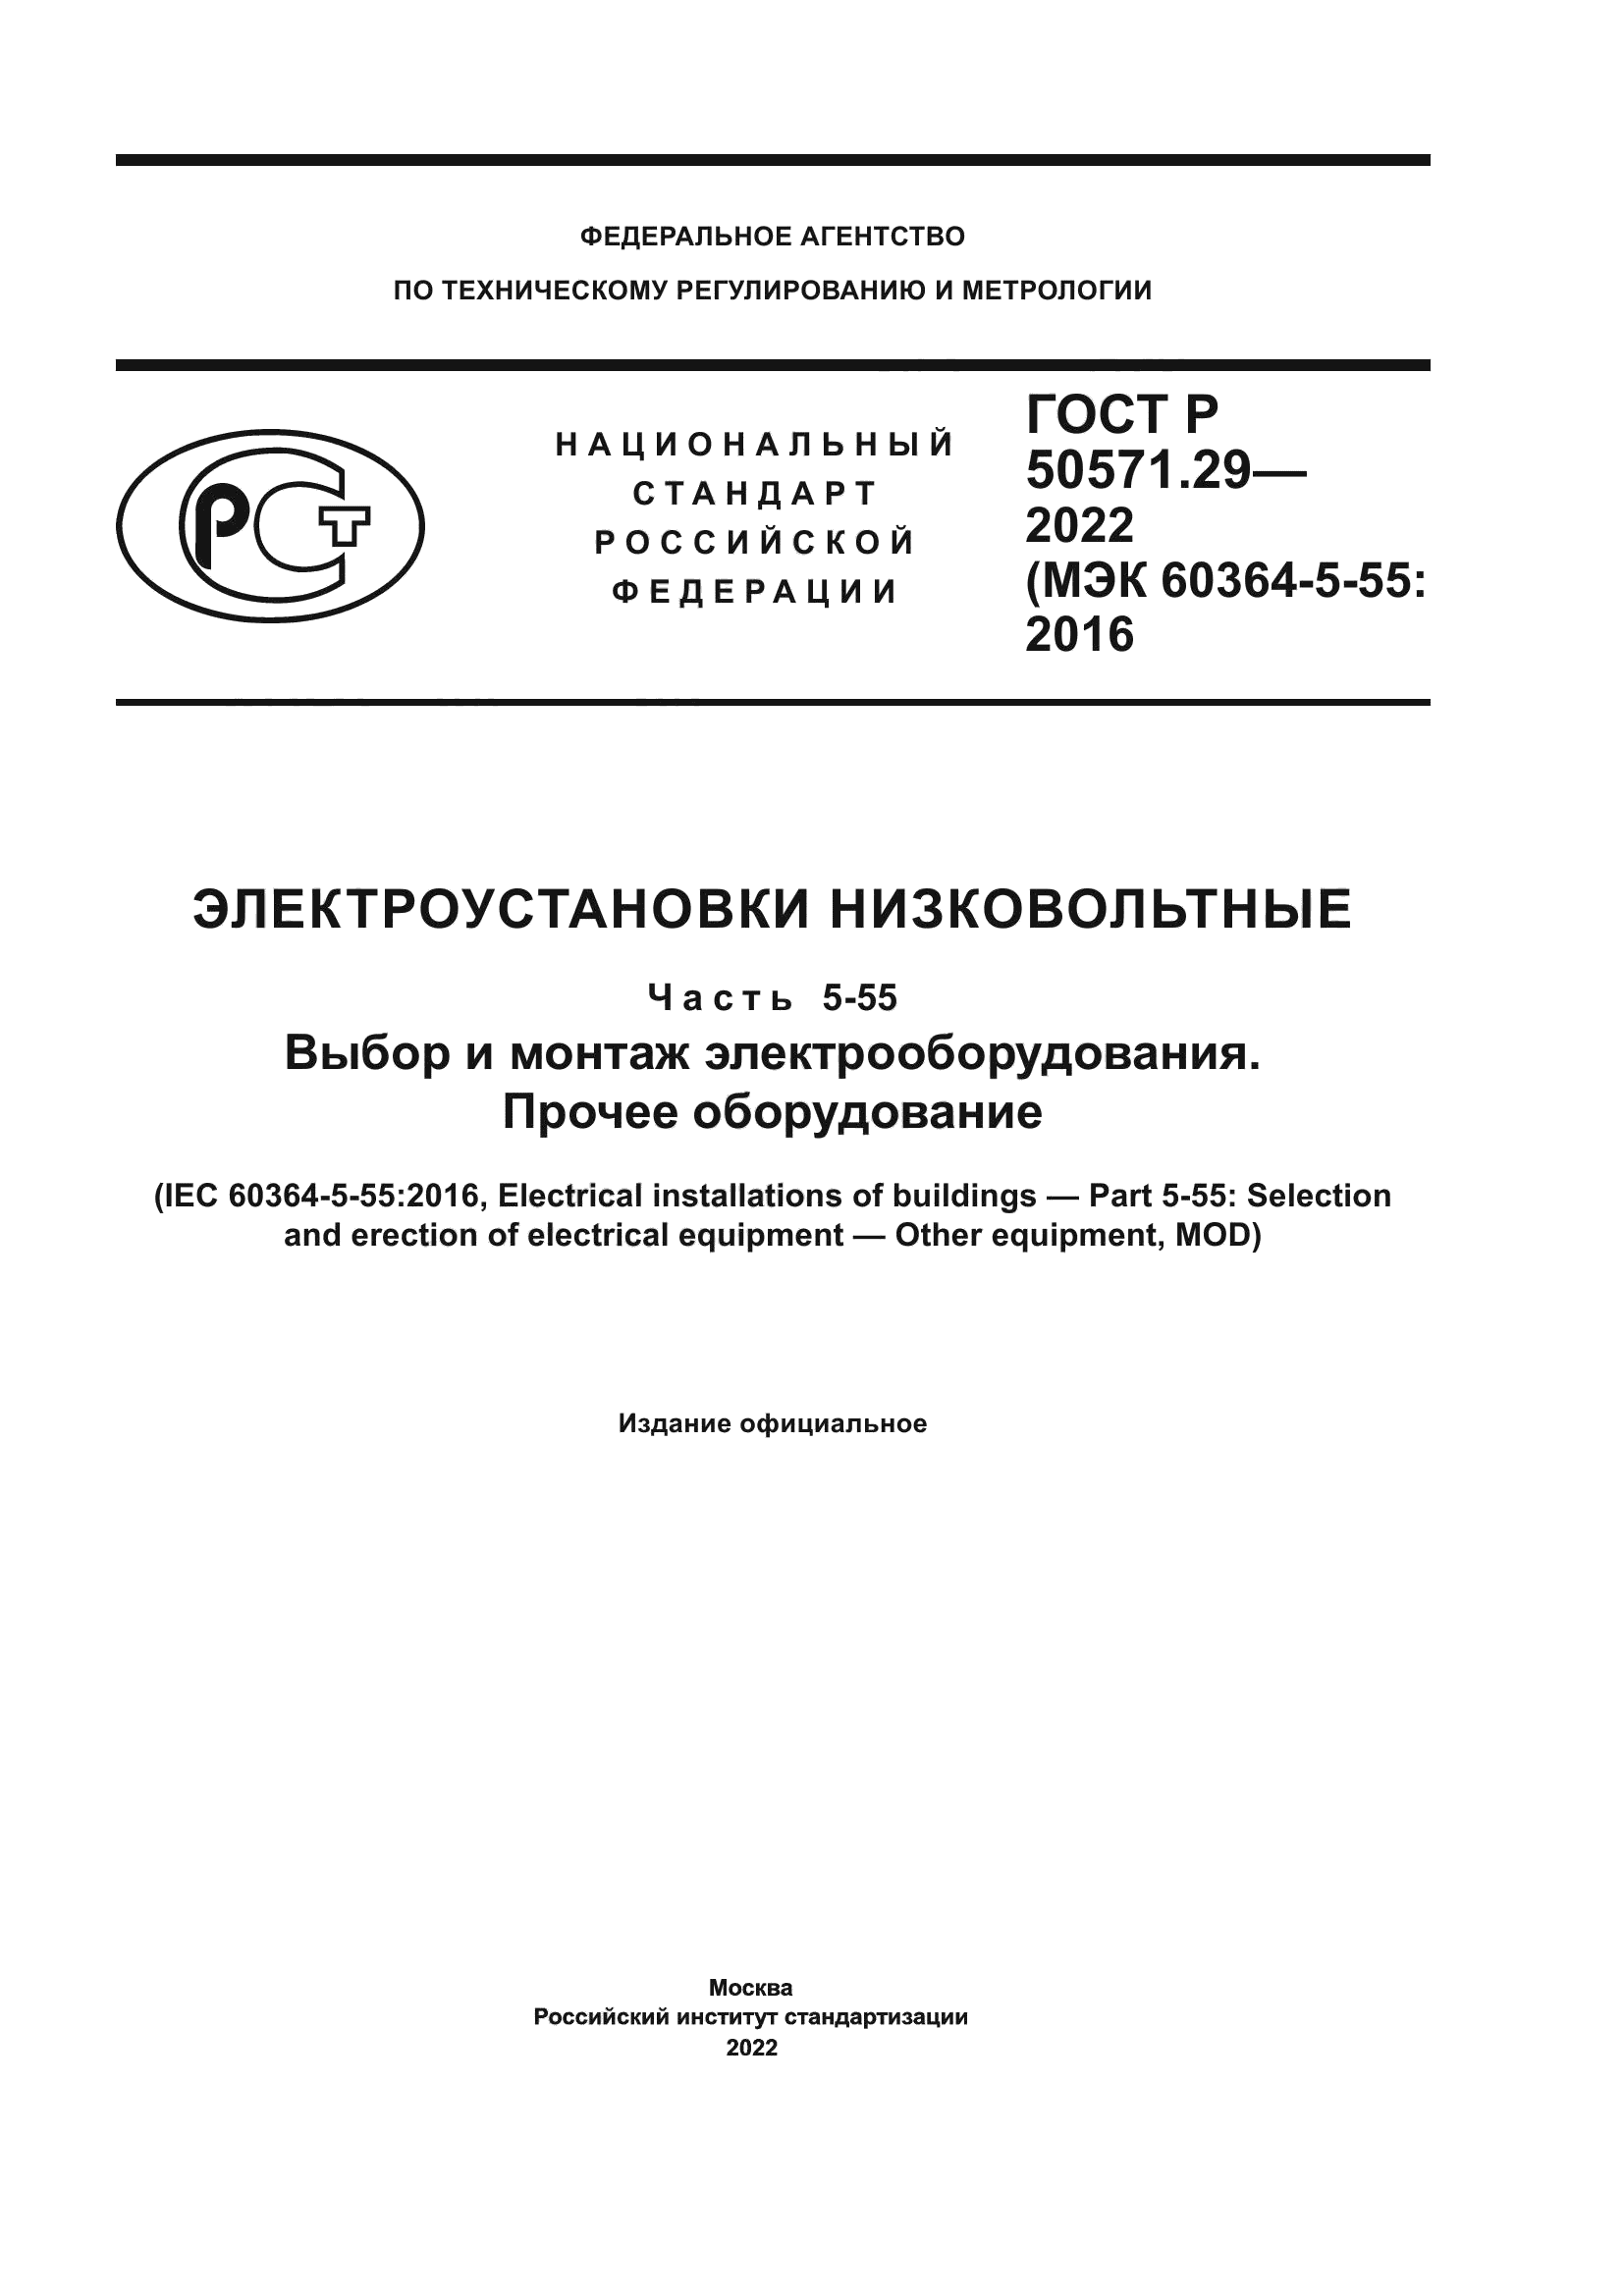 ГОСТ Р 50571.29-2022